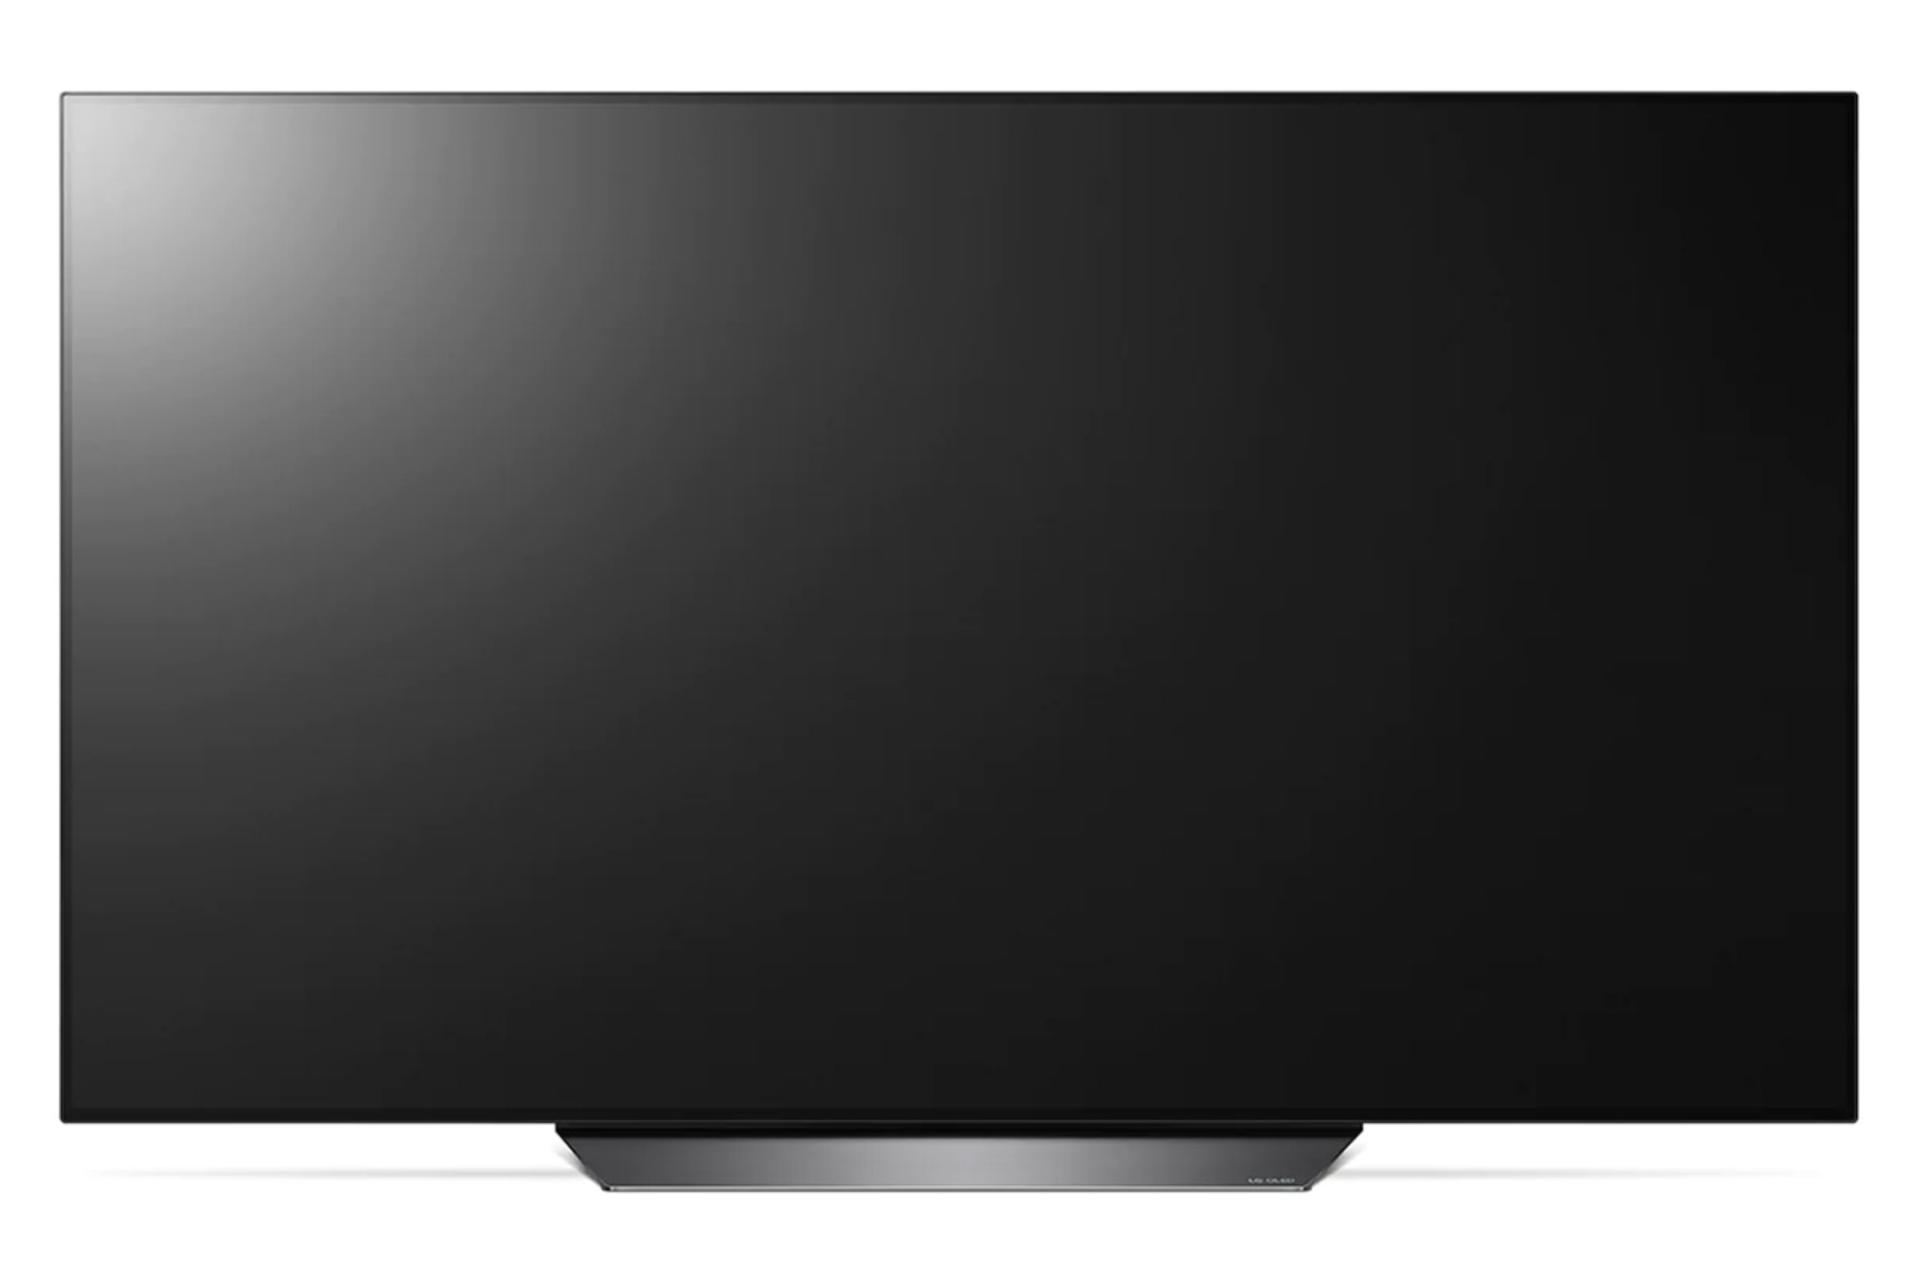 نمای جلو تلویزیون ال جی OLED55B8GI در حالت خاموش